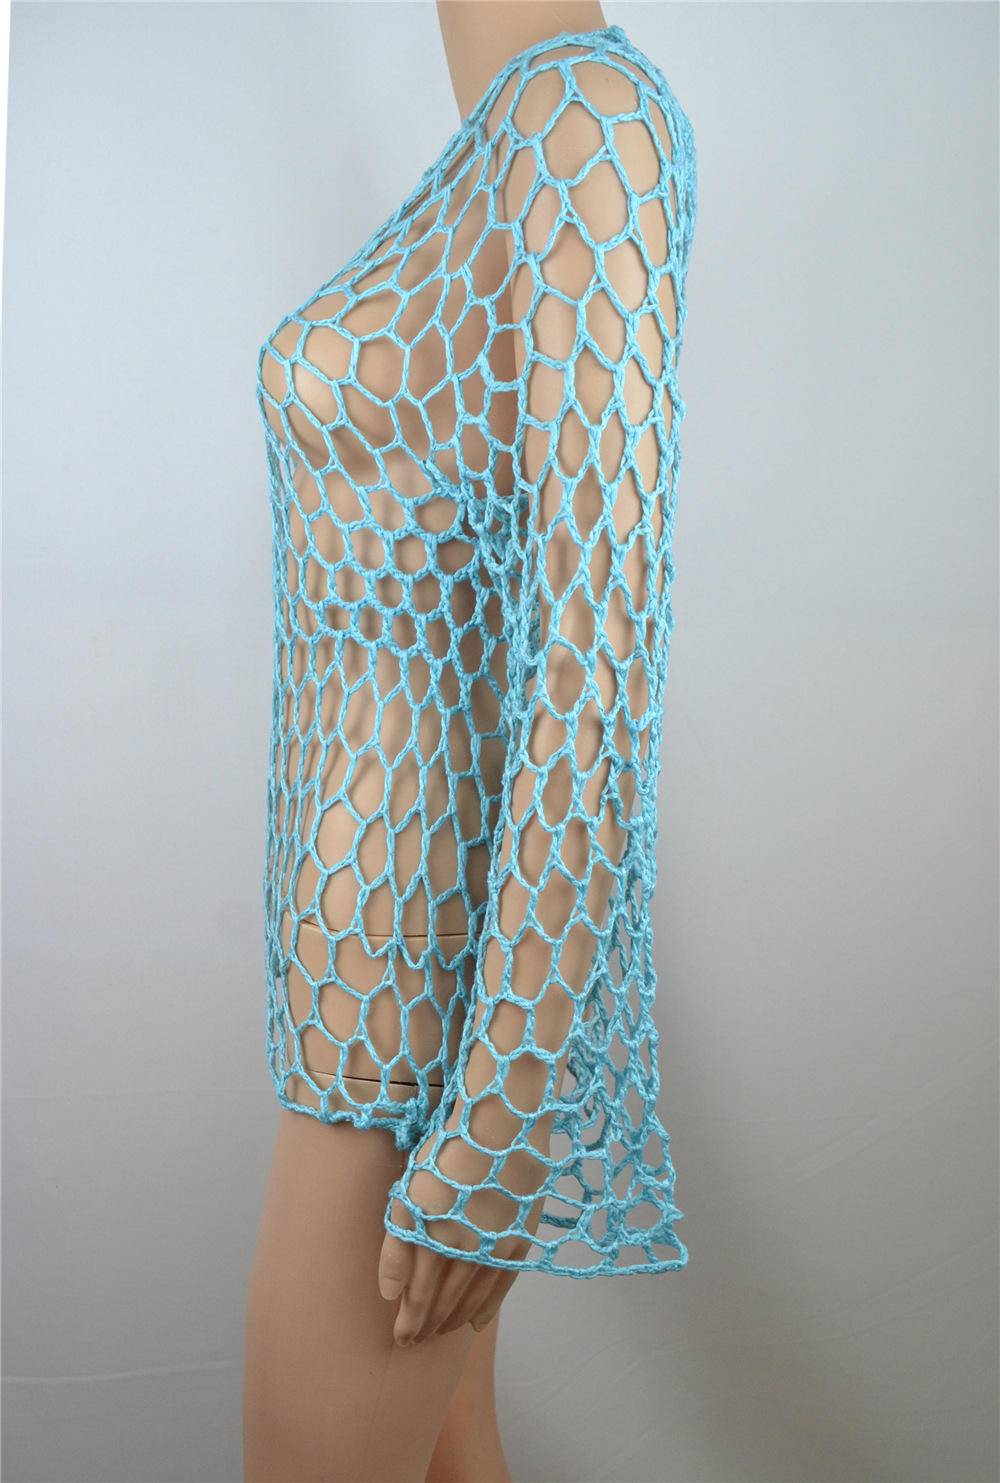 Blue Fishnet Crochet Beach Cover Up Dress, Short, Tunic Pareo, Swim Bikini Cover Up Beachwear